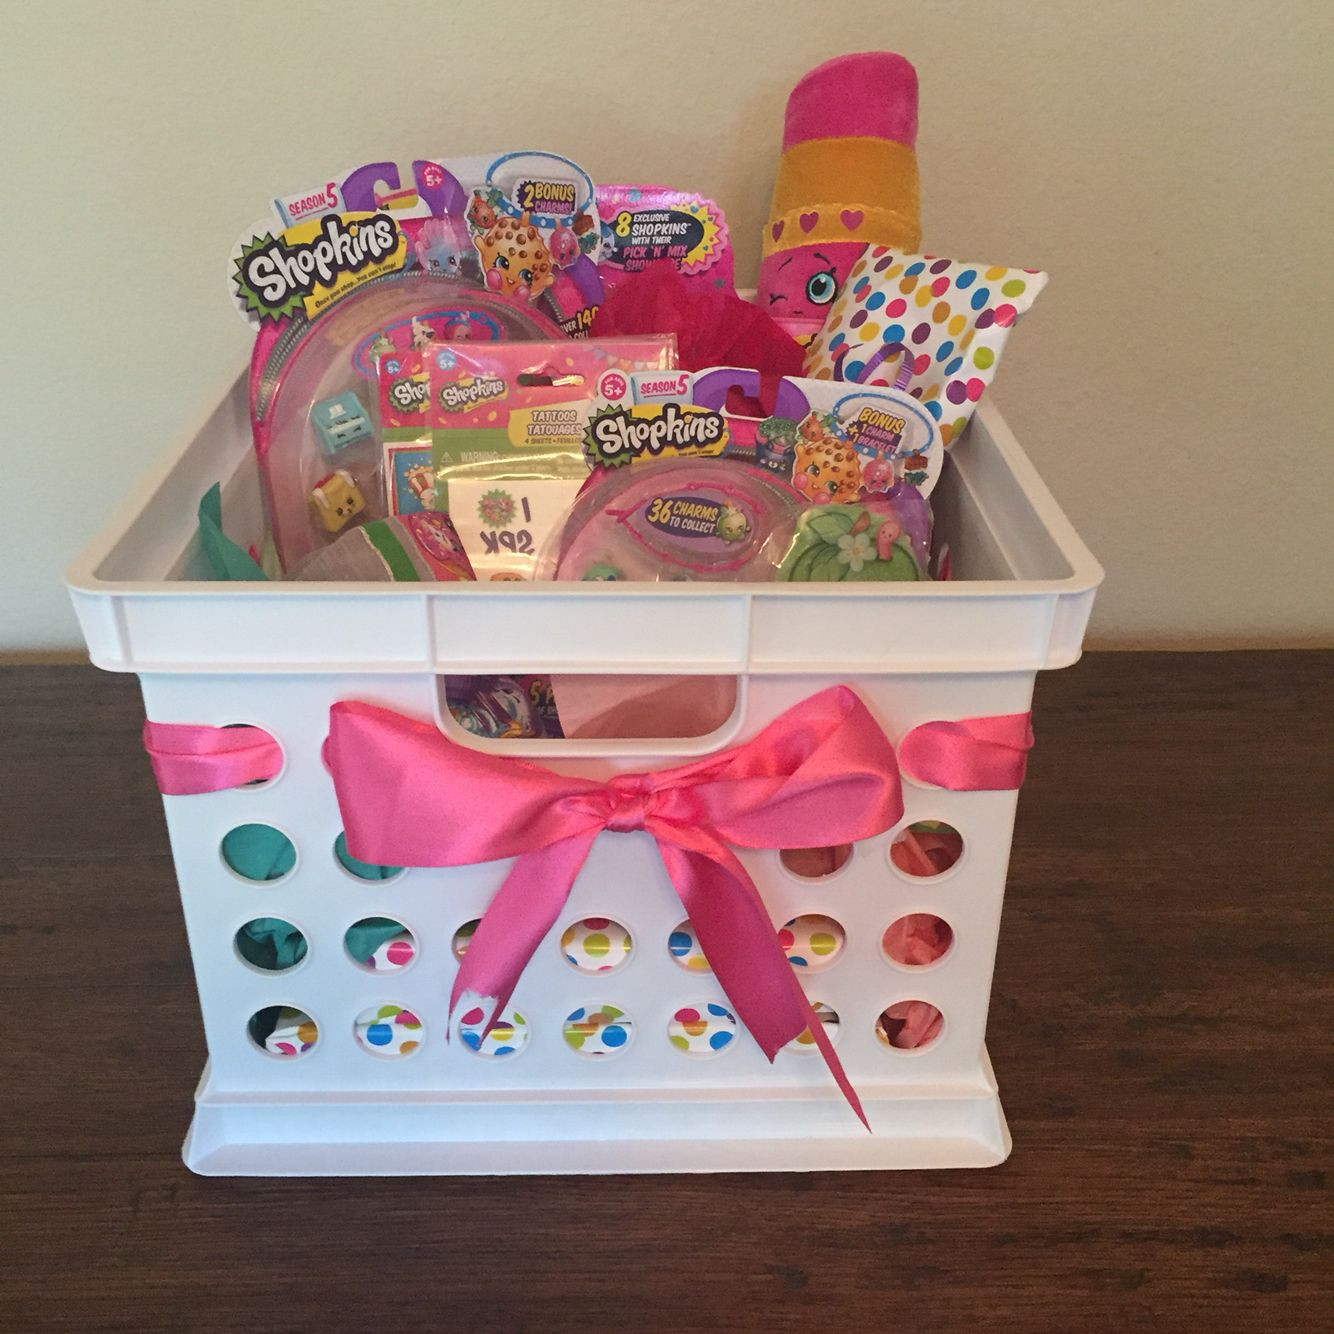 Christmas Gift Basket Ideas For Kids
 Shopkins Gift Basket